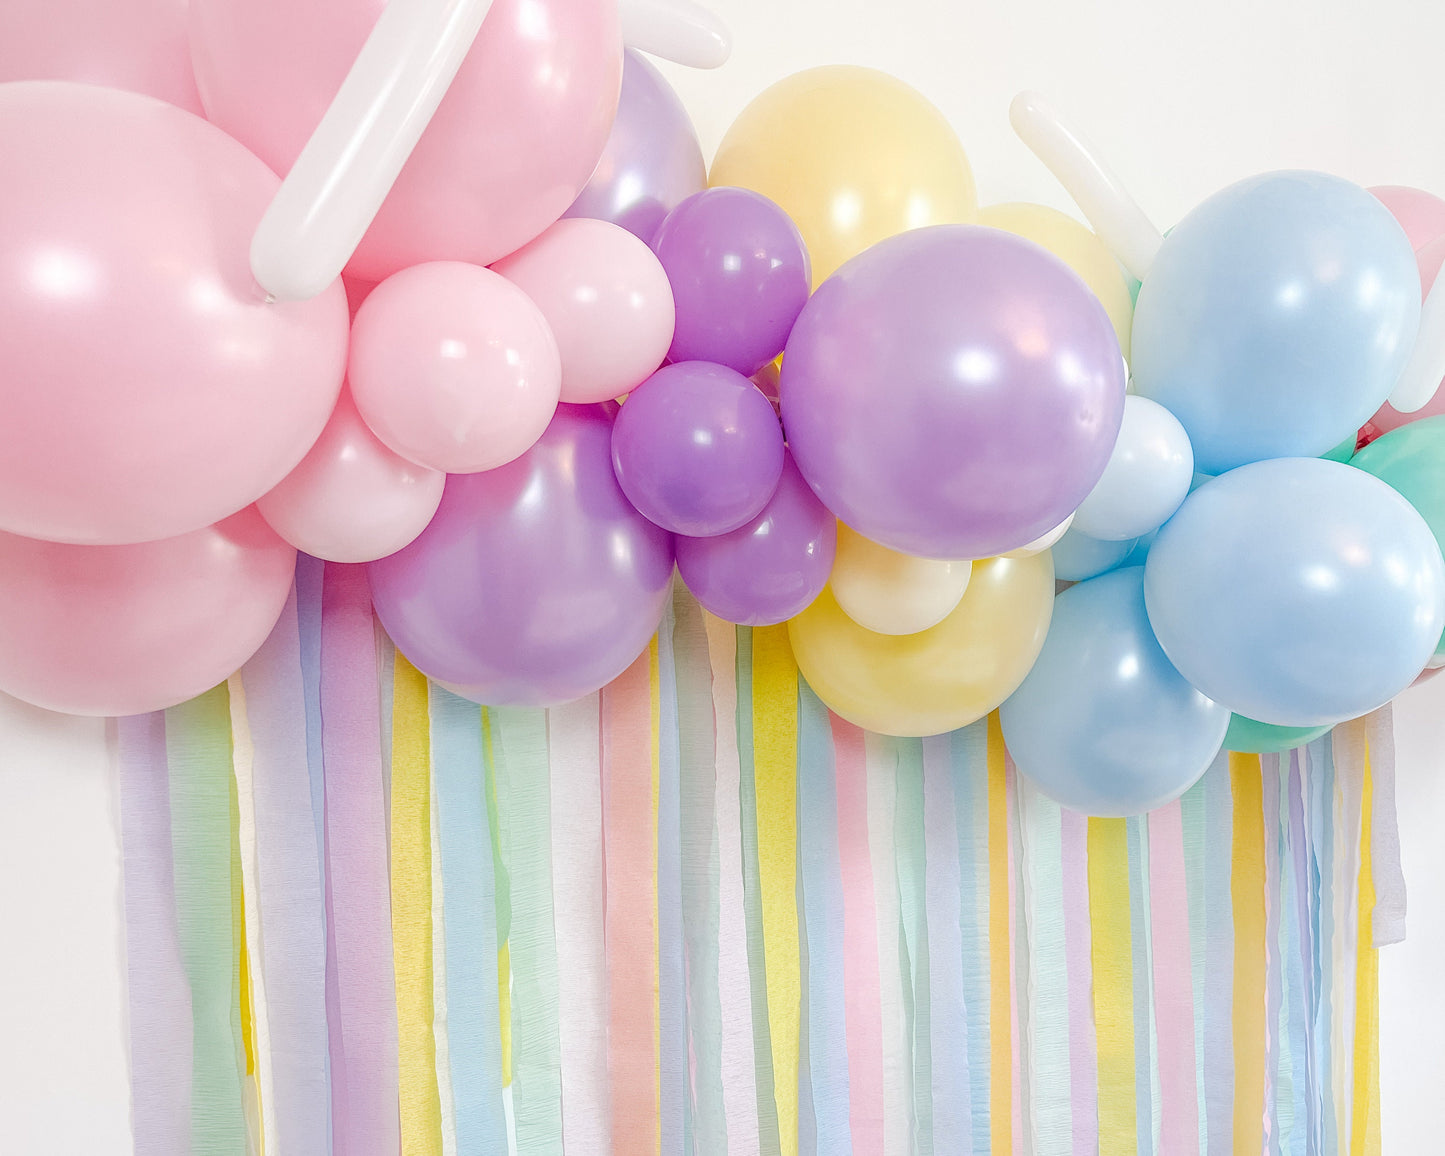 6' Ice Cream Balloon & Streamer Backdrop Kit || Summer Party Balloon Garland || Pastel Balloon Arch || Girl's Birthday Party Decor